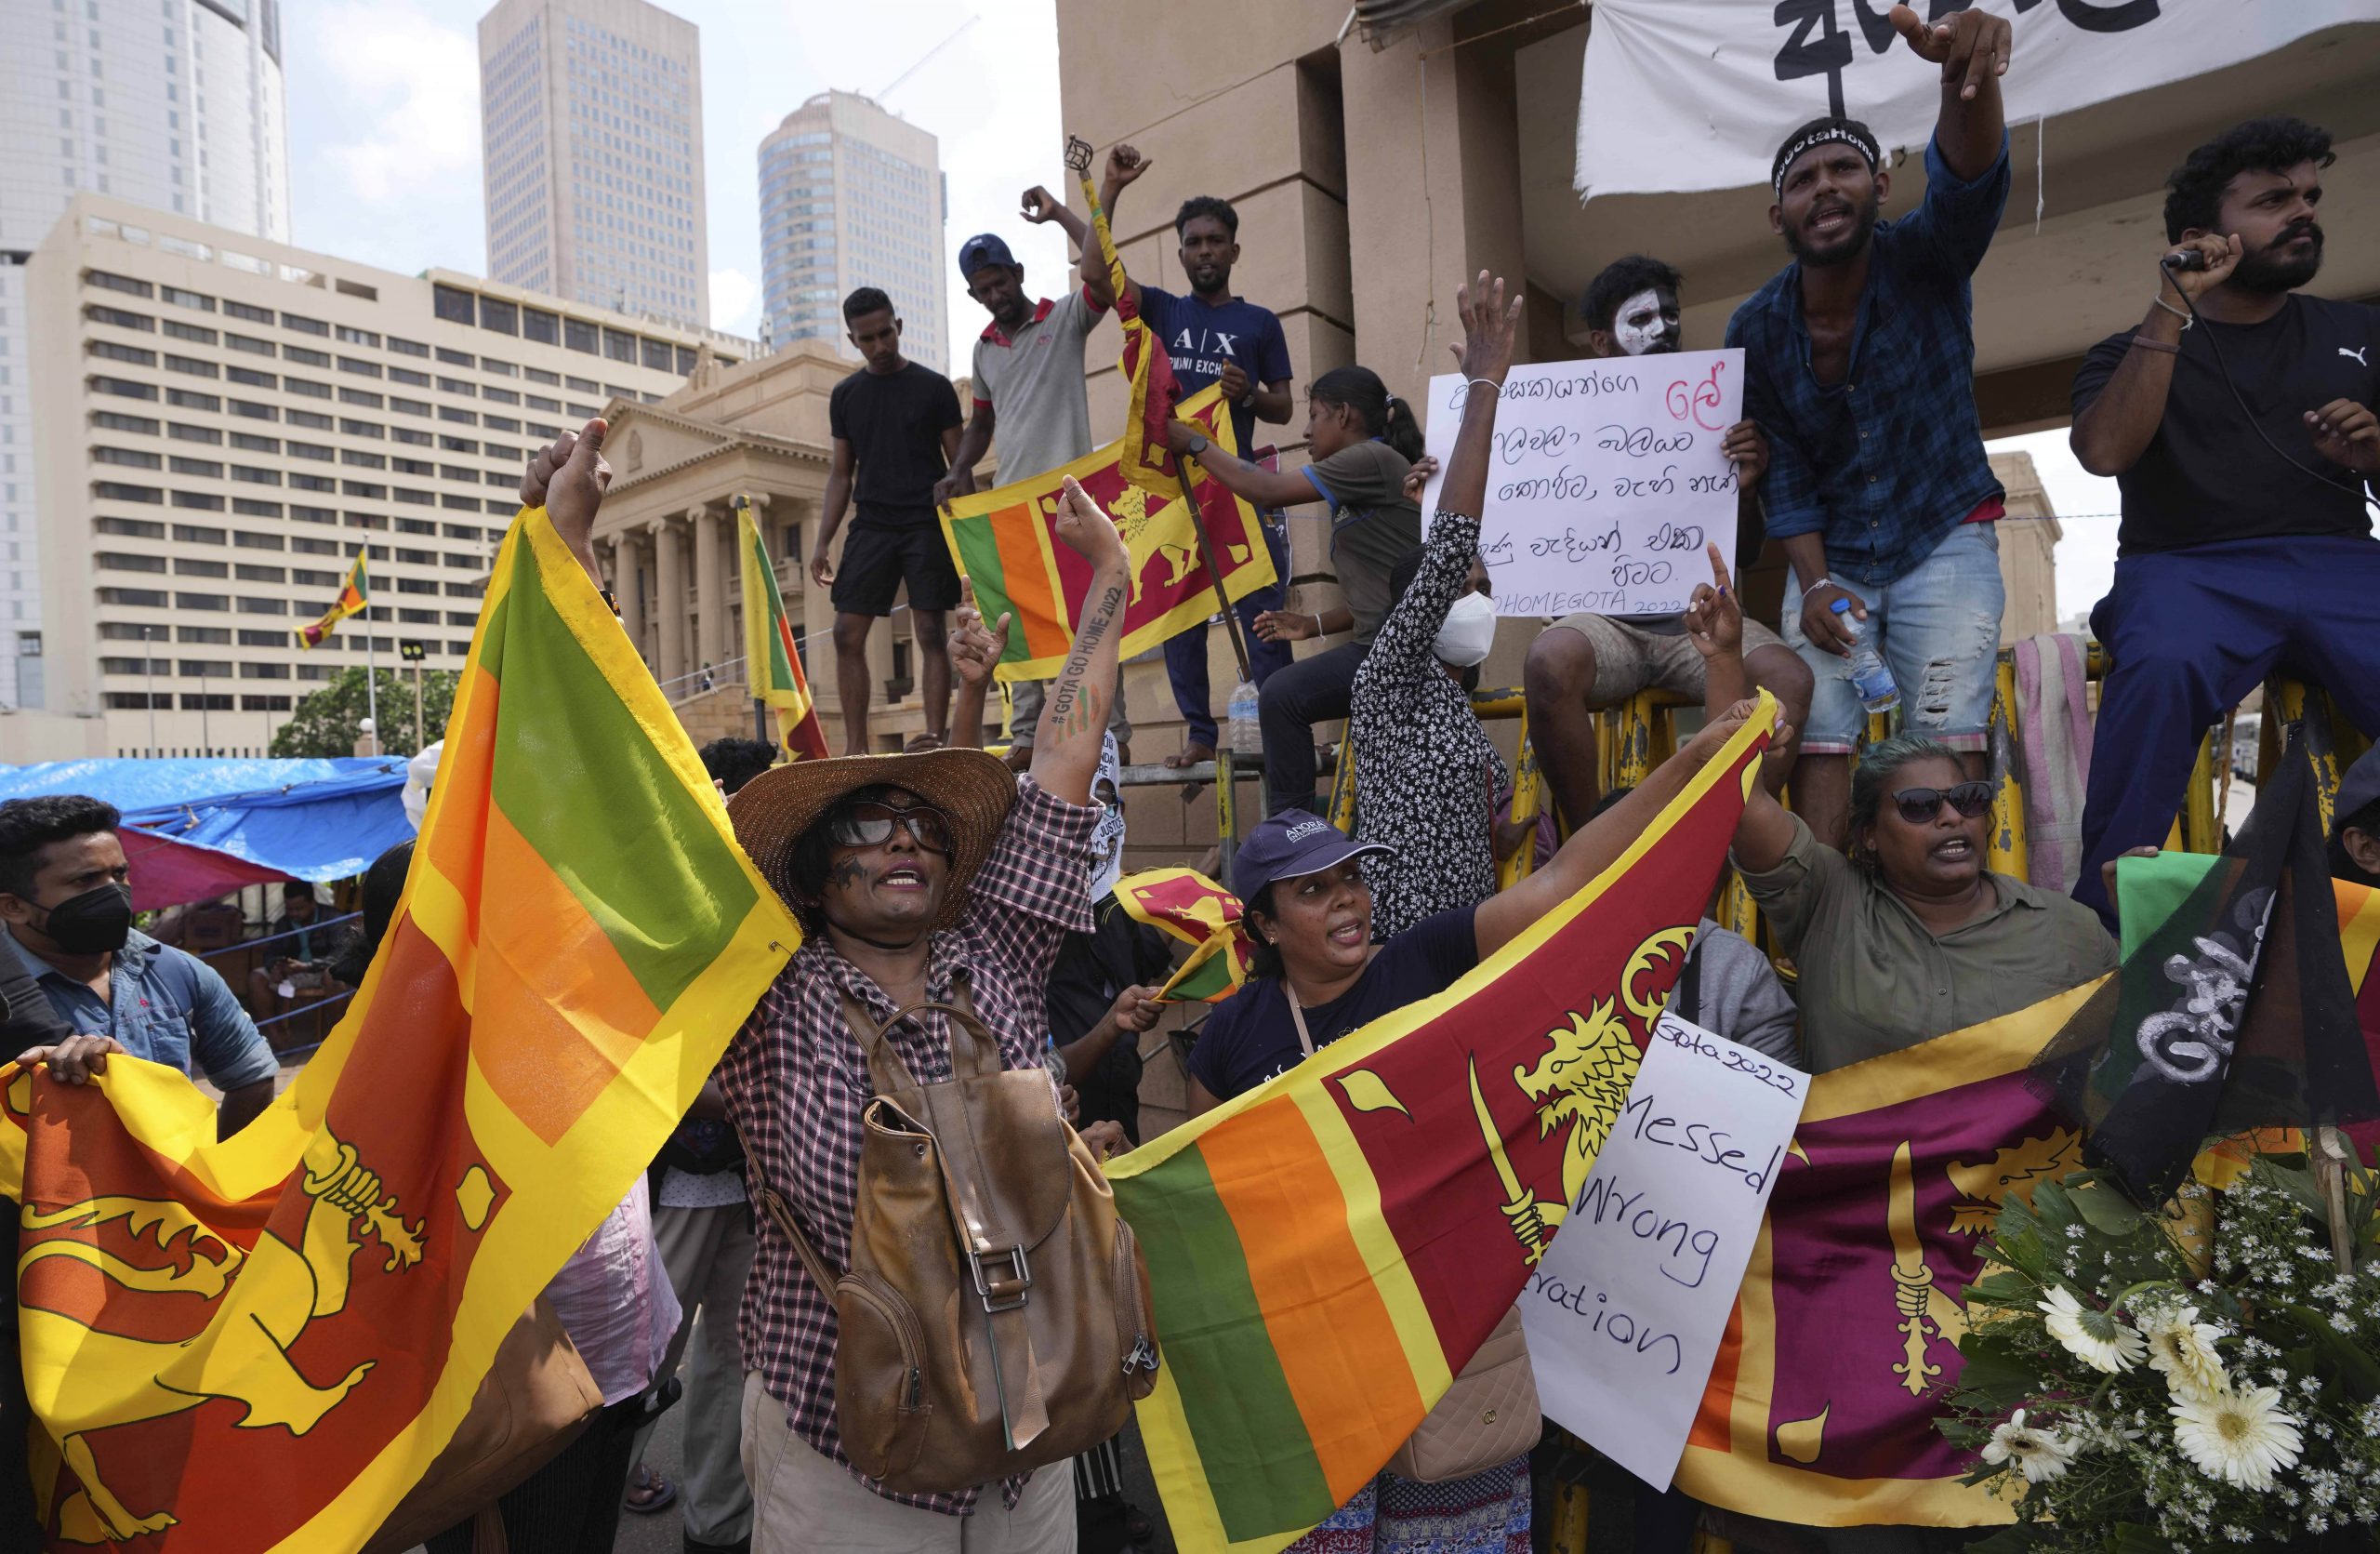 Crisis-hit Sri Lanka lifts curfew order after backlash